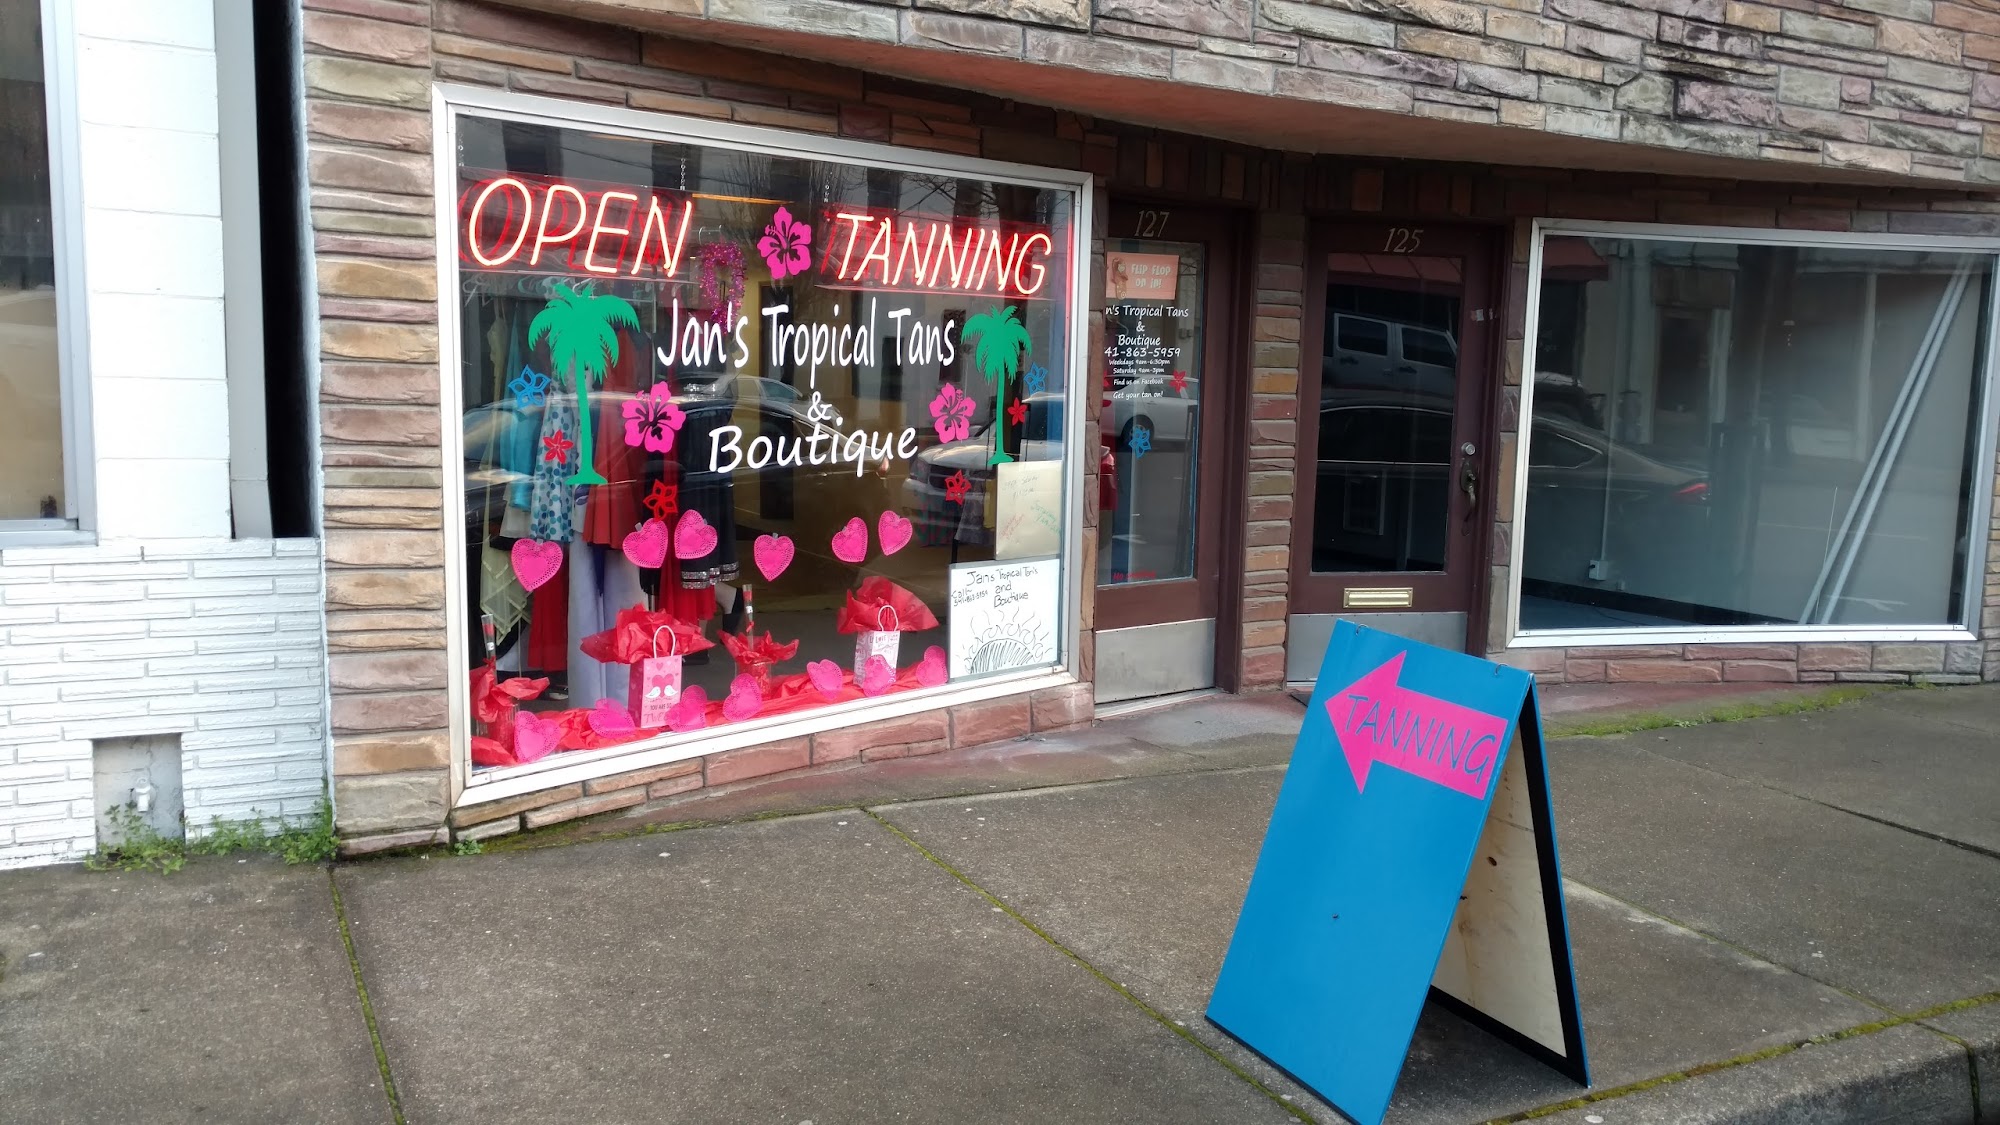 Jan's Tropical Tans & Boutique 127 NW 2nd Ave, Myrtle Creek Oregon 97457